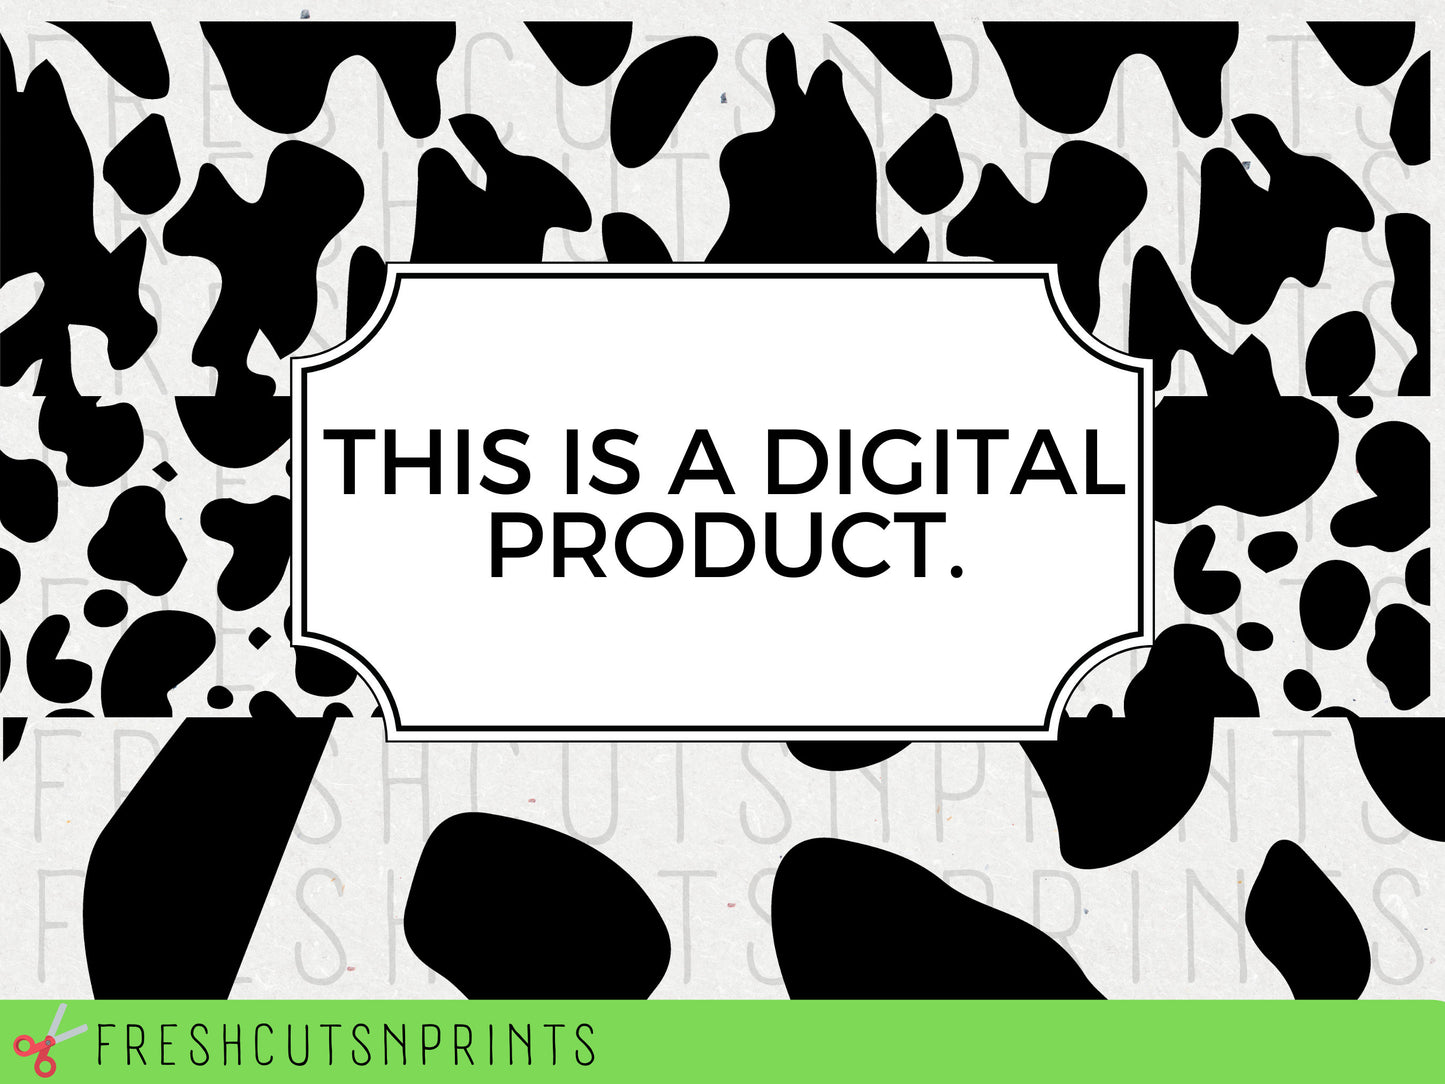 Cow Print SVG , Cow Print SVG, Seamless Pattern svg, Cow Skin svg, Animal Print svg, Cow Print Cricut, Cow Skin Cricut, Cow Pattern svg